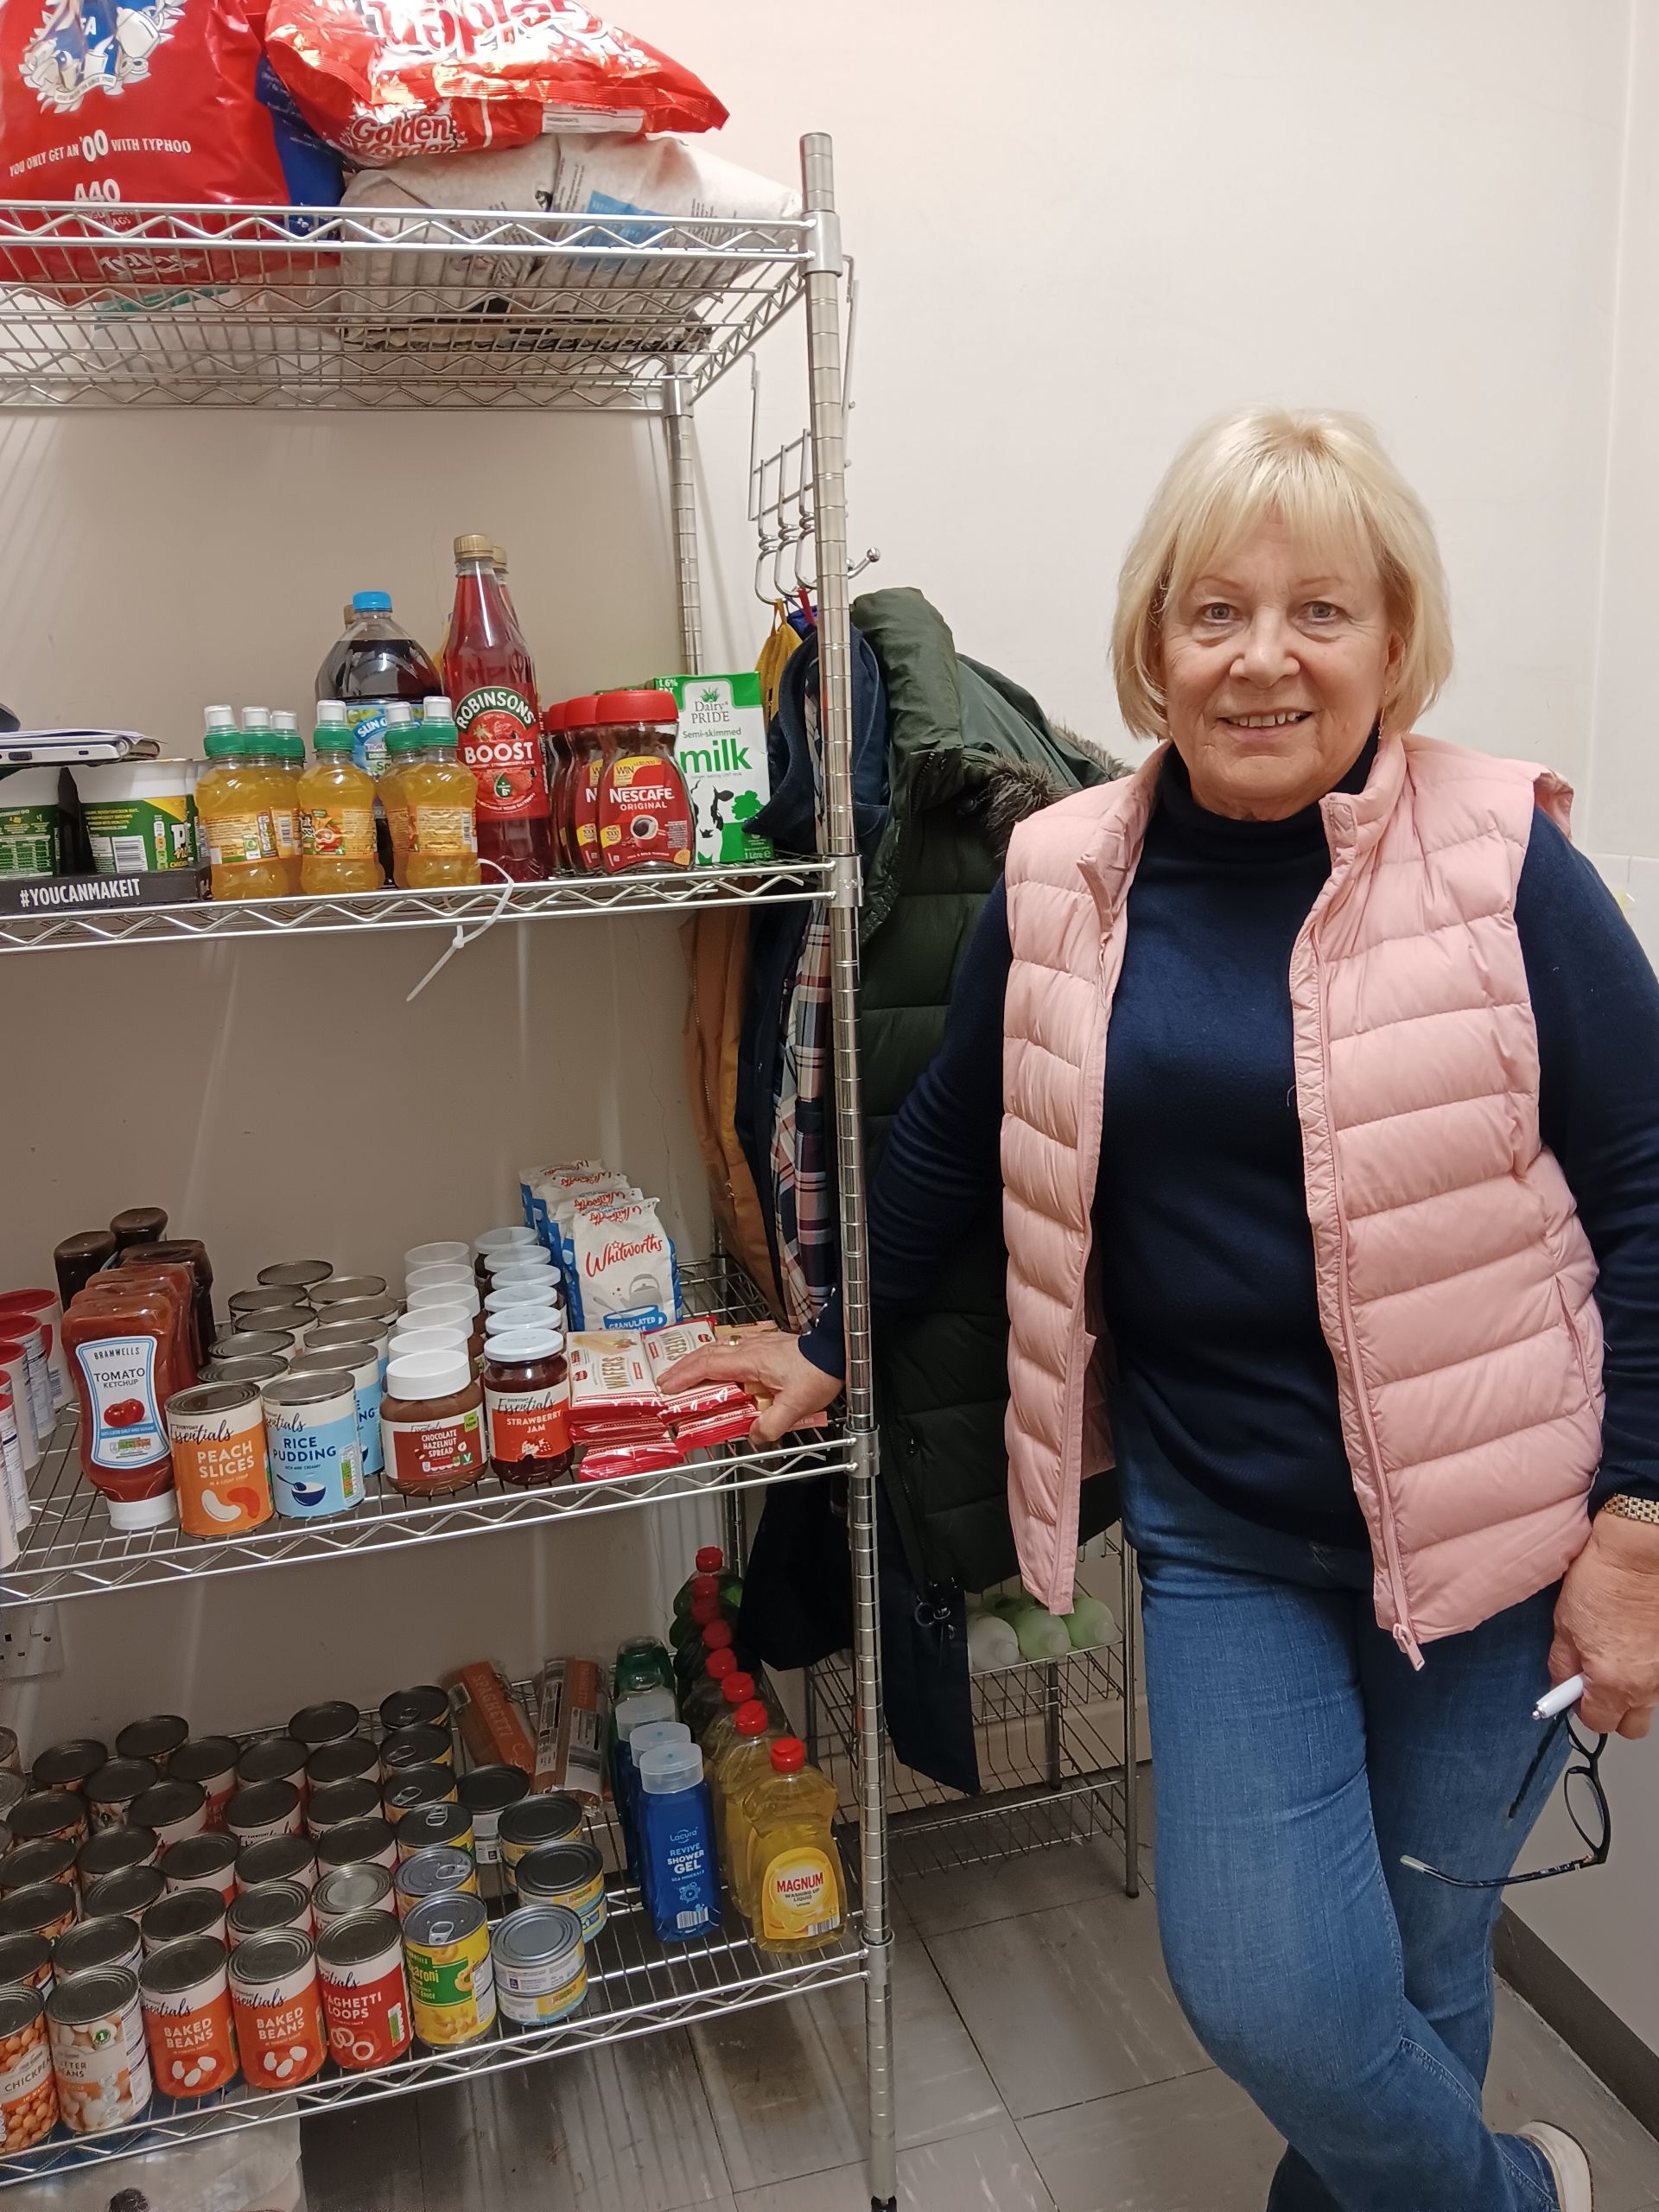 Largs Food Hub Volunteer standing next to stocked shelves